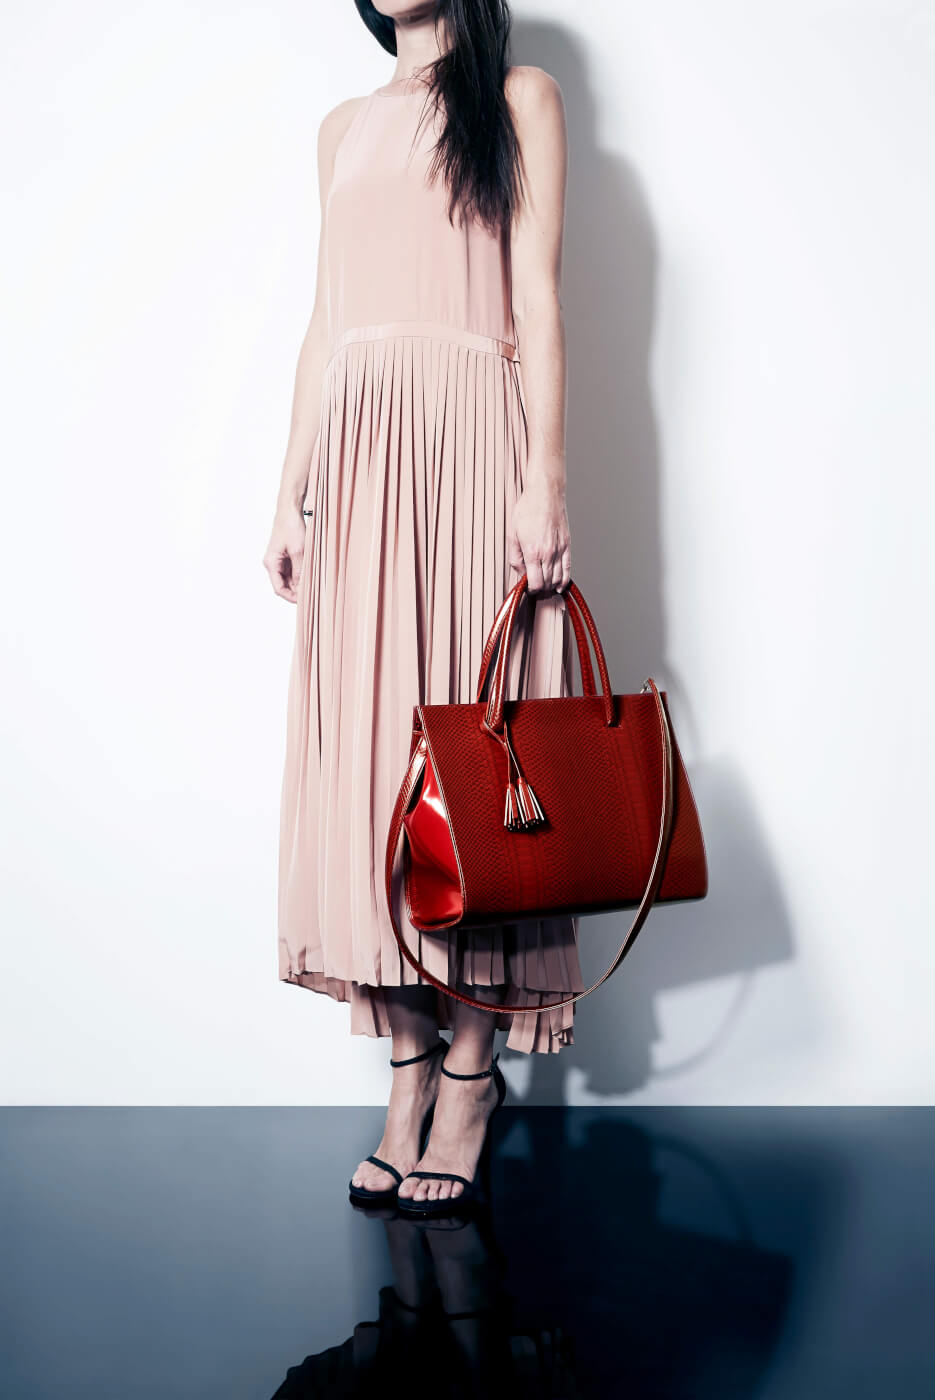 Peta reveals horrific conditions behind the production of Hermès's Birkin  bag